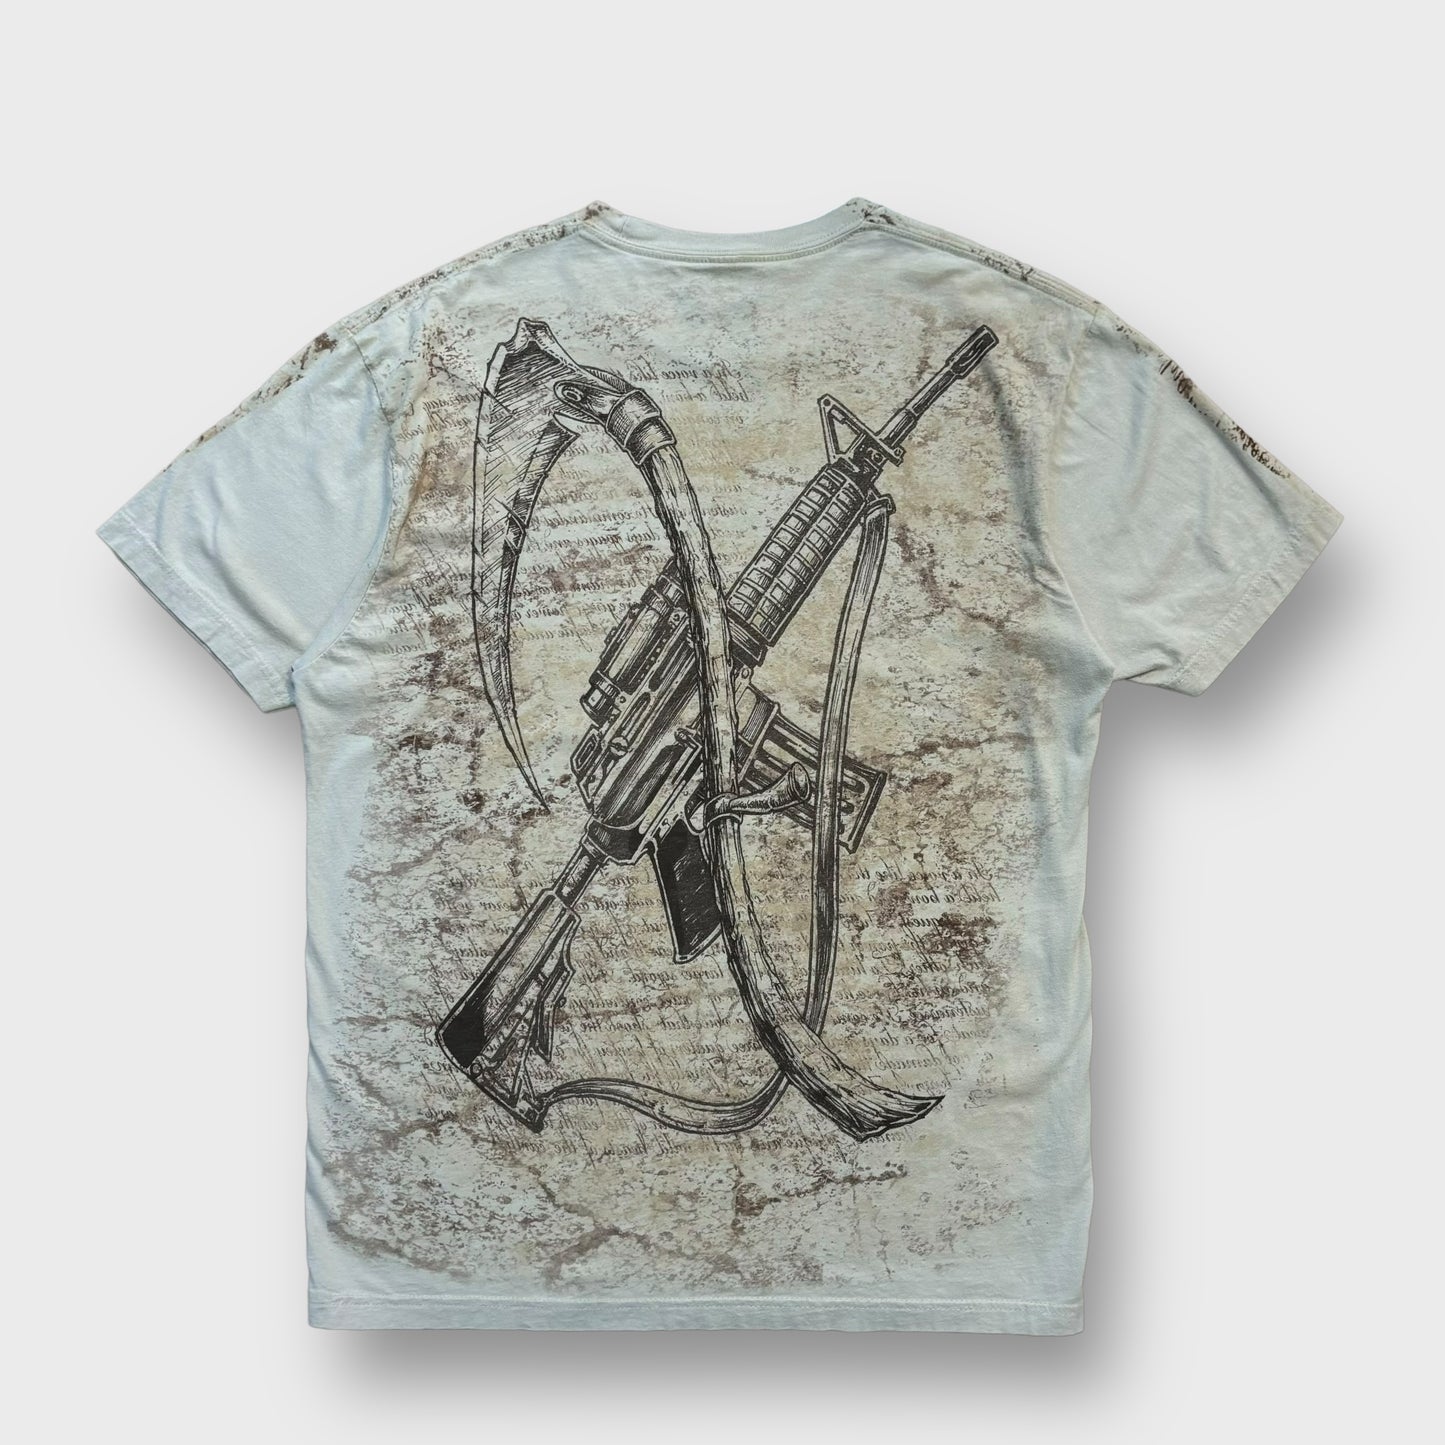 "Apprime" graphic design t-shirt